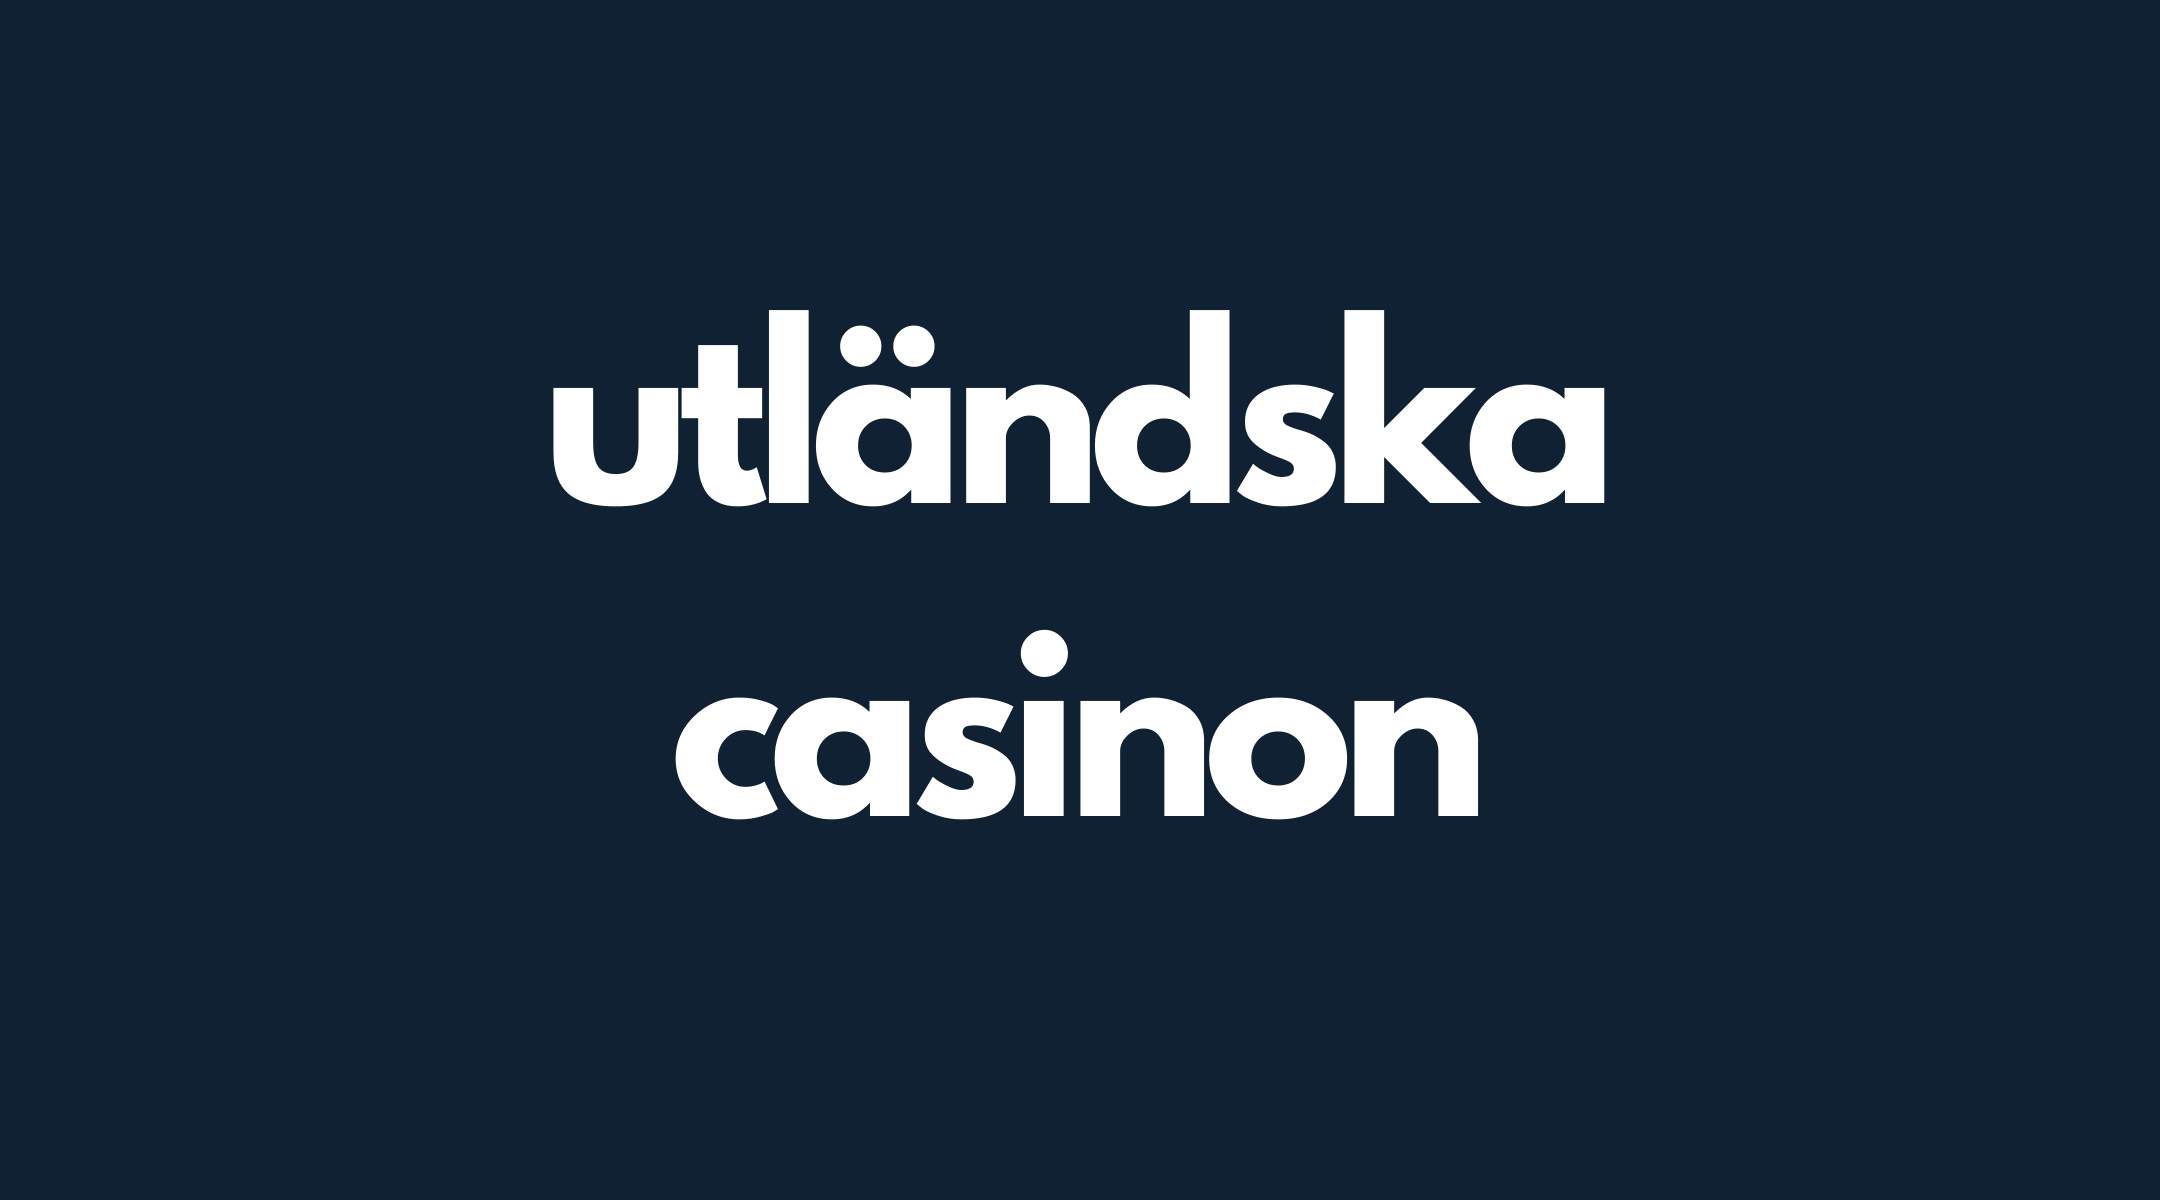 casino utan svensk licens